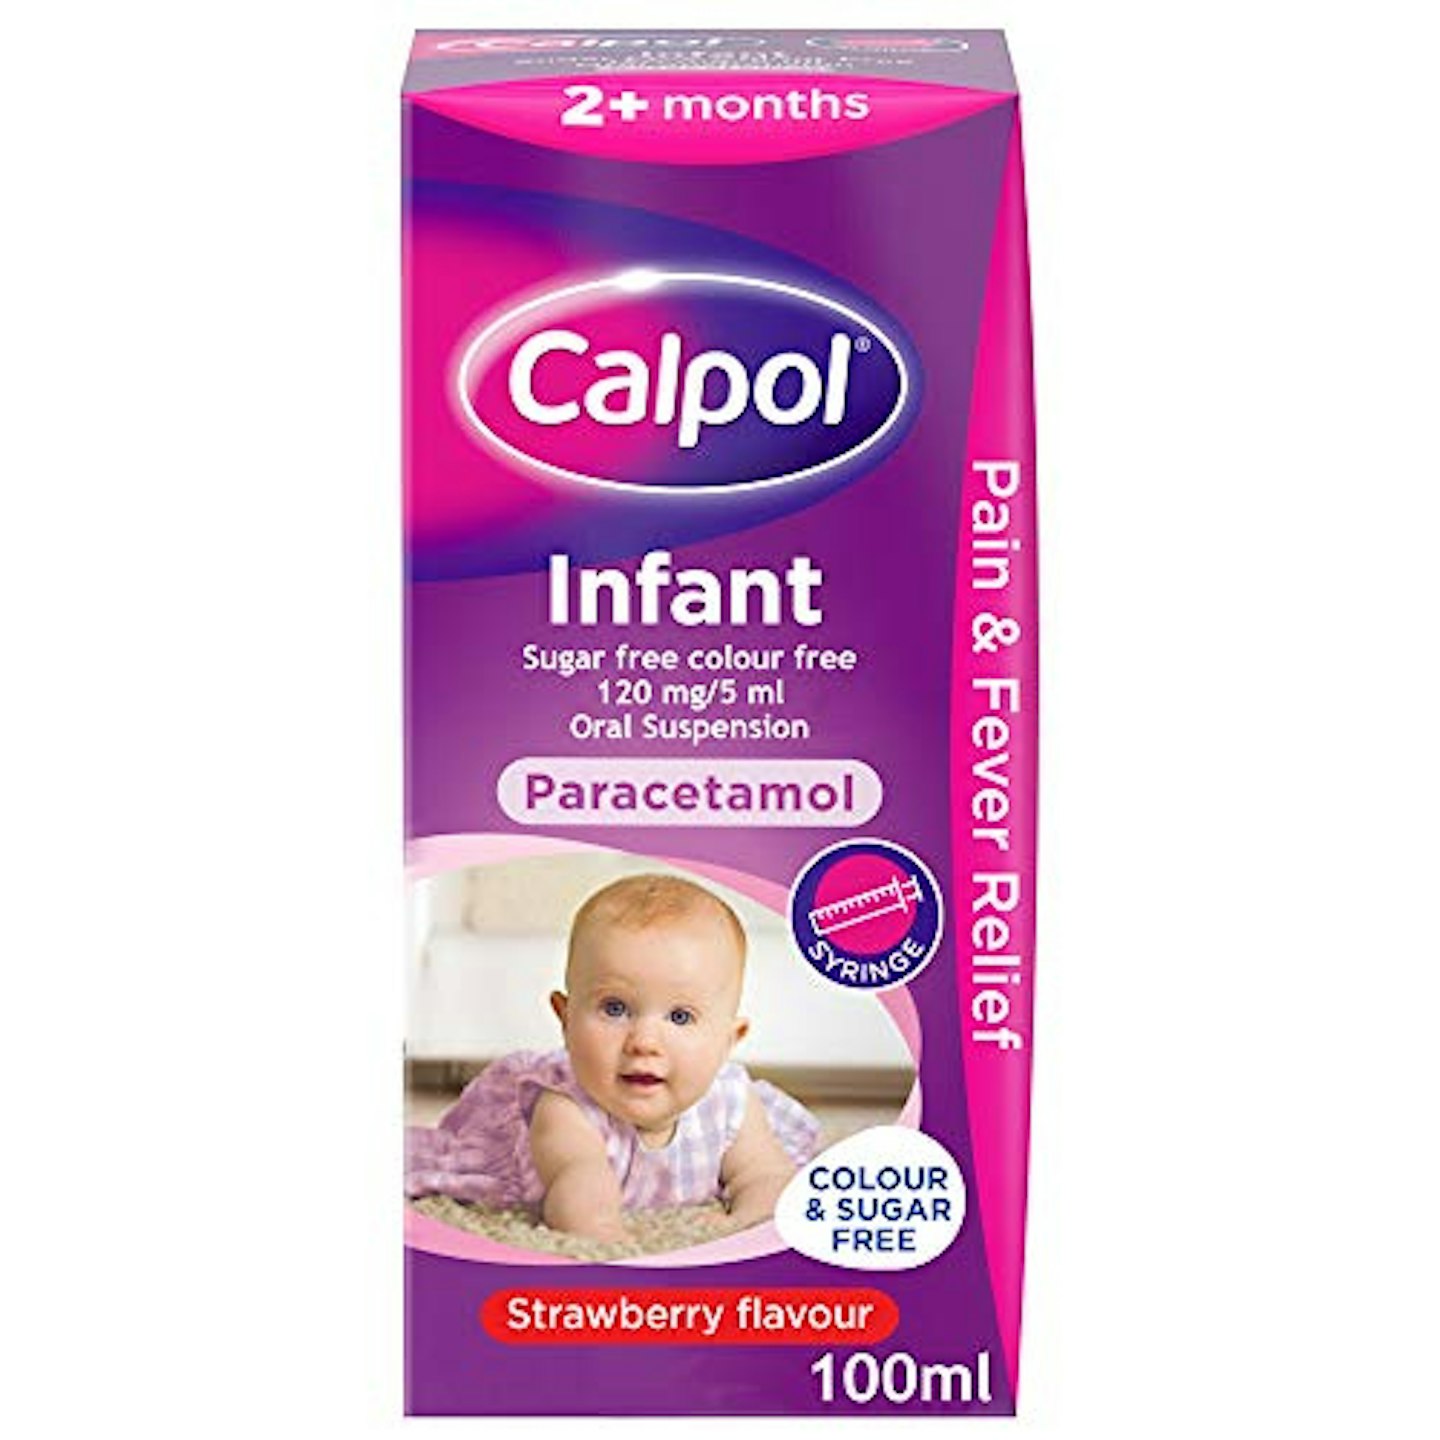 Calpol Sugar Free Infant Suspension Medication - 100ml - Strawberry Flavour